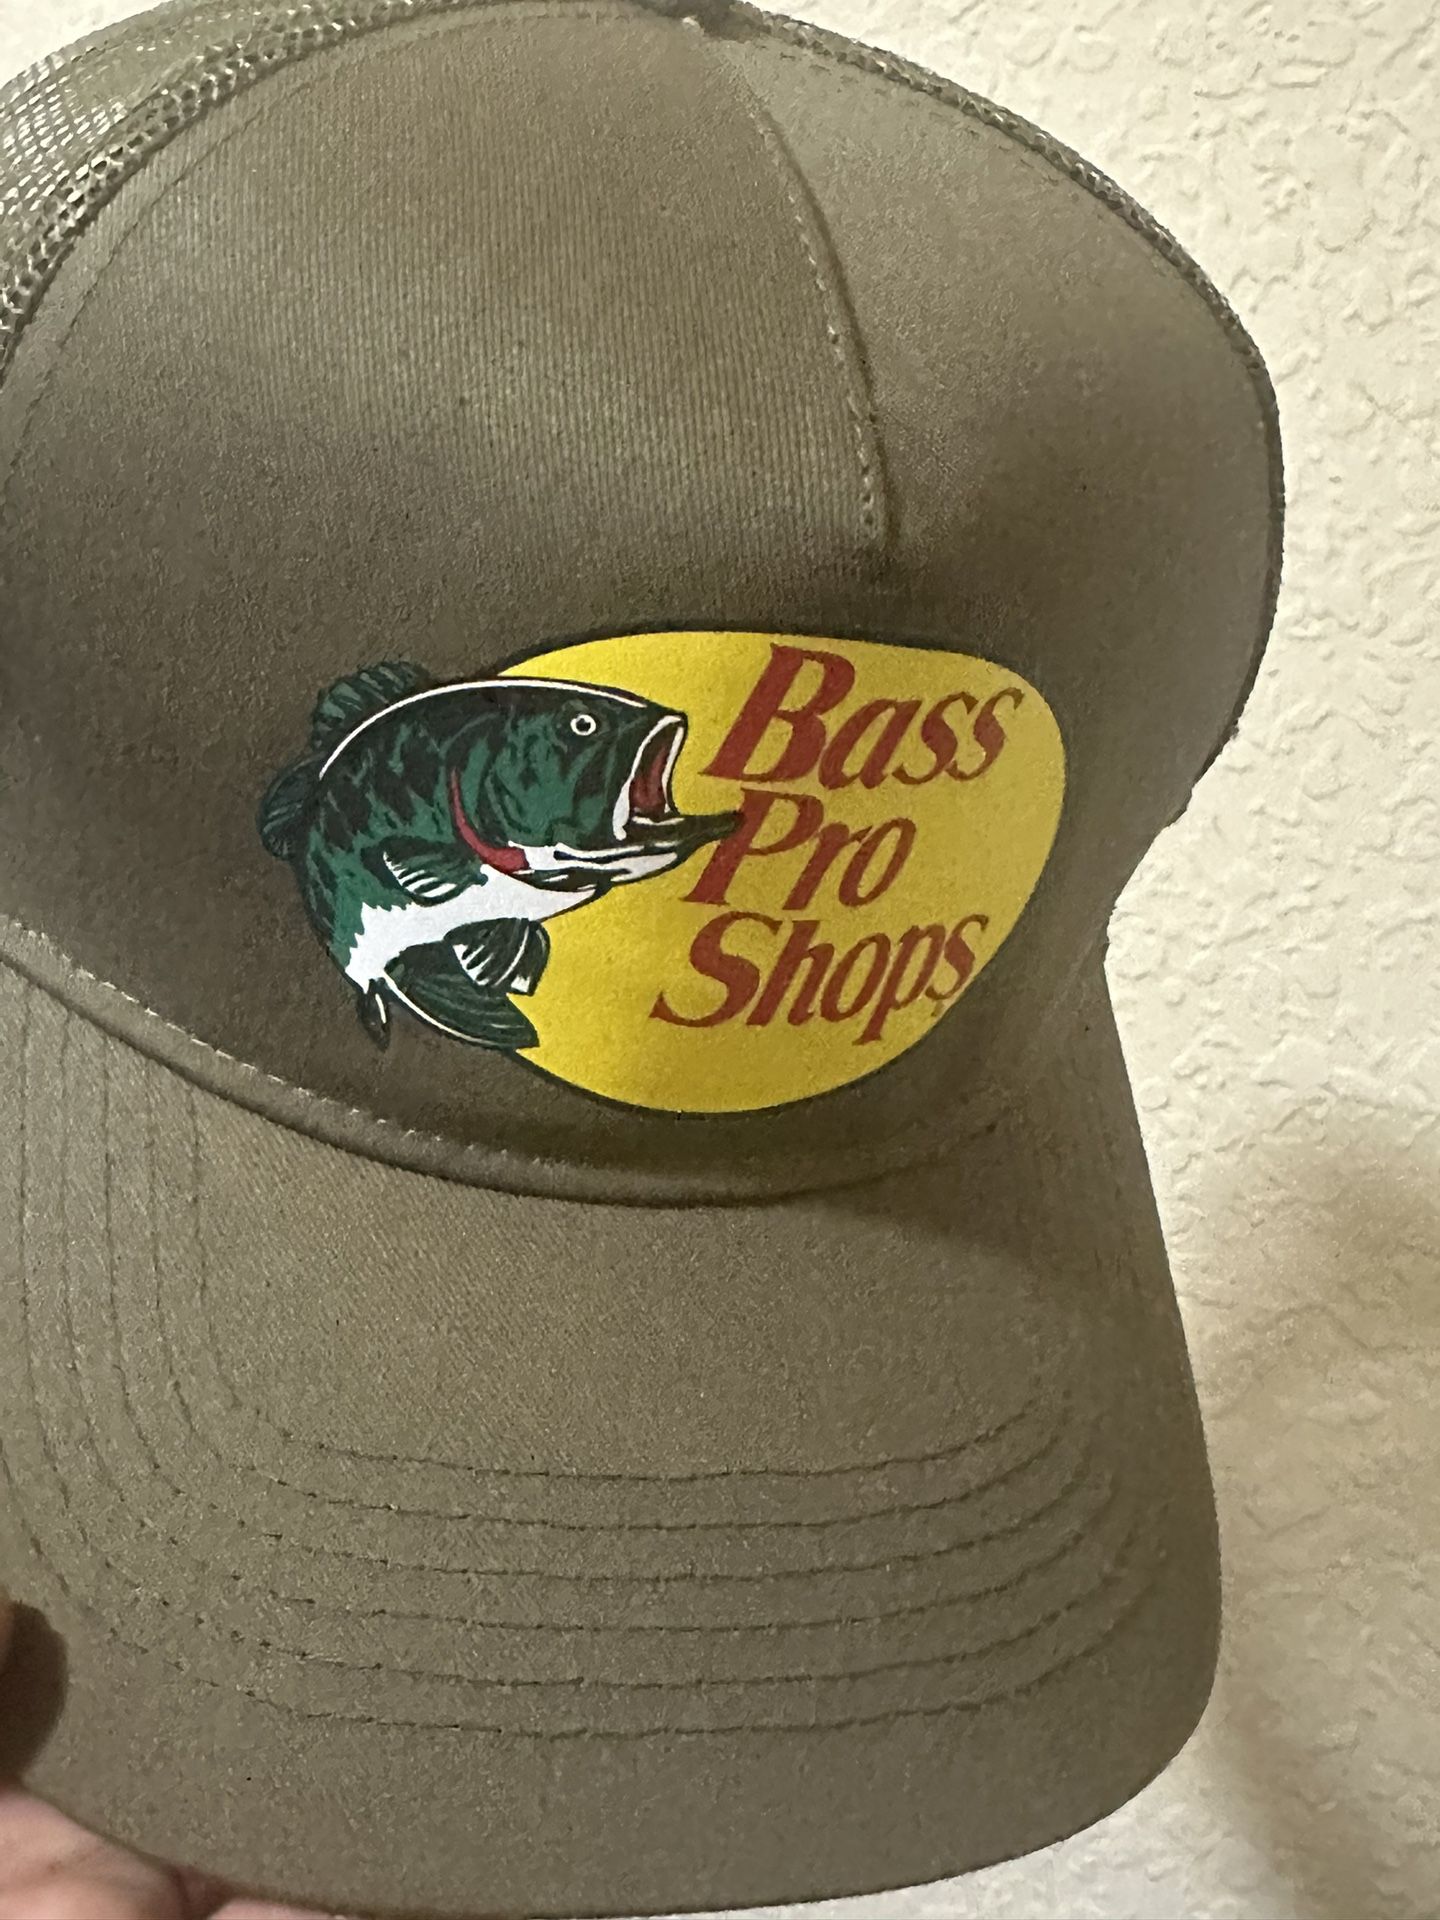 Bass Pro Hat $5